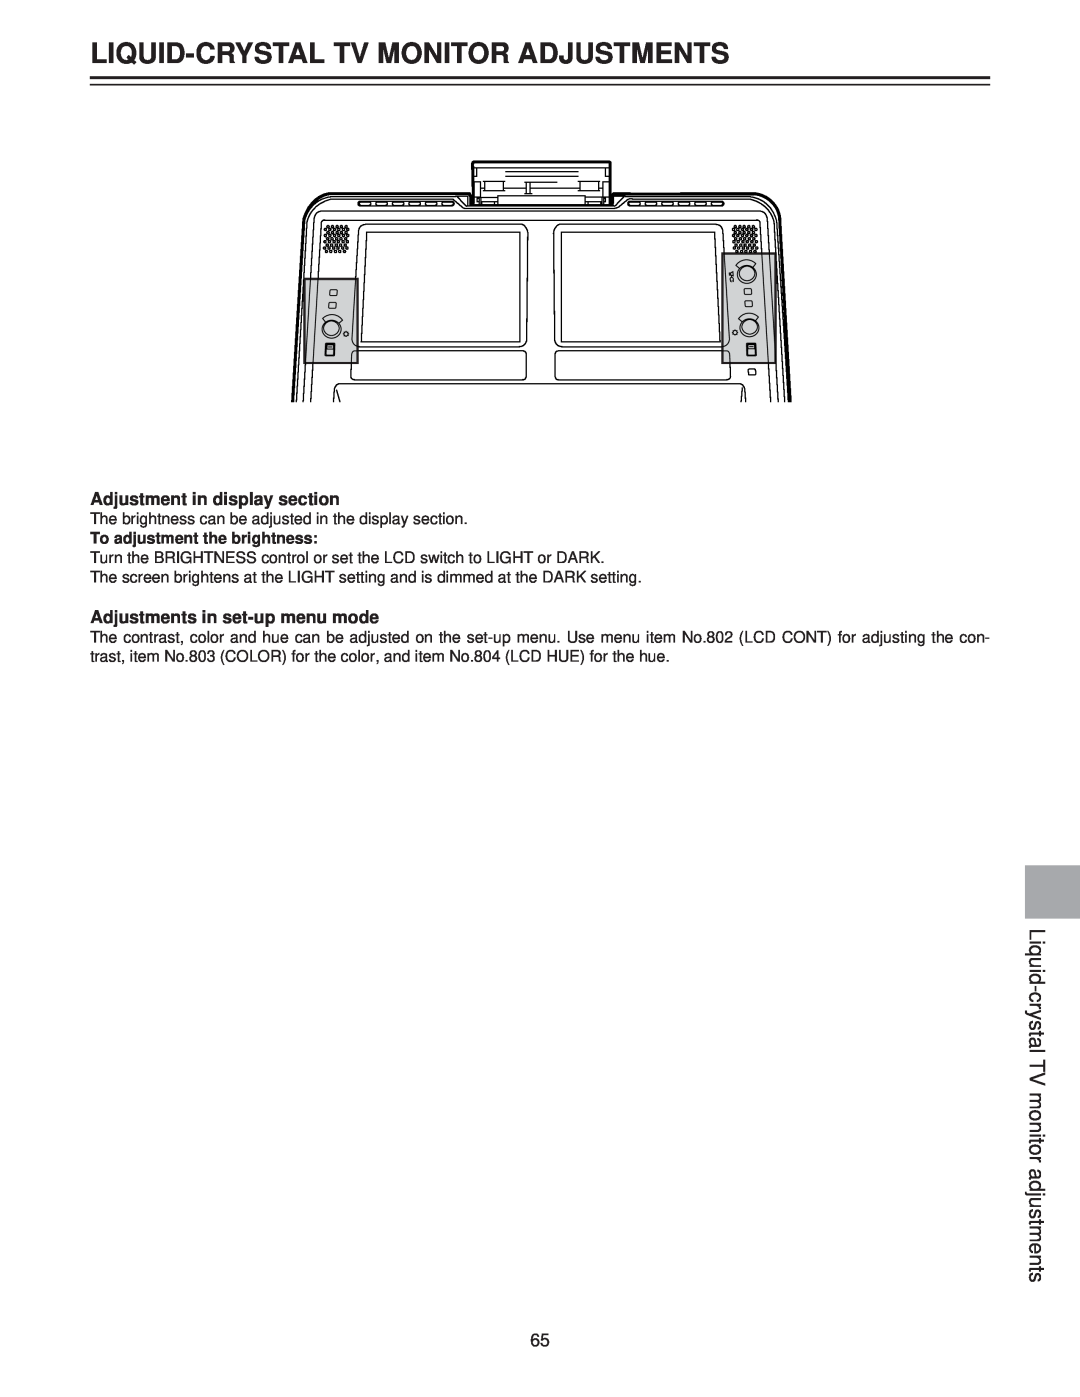 Panasonic AJ-LT85P manual Liquid-Crystal Tv Monitor Adjustments, Liquid-crystal TV monitor adjustments 